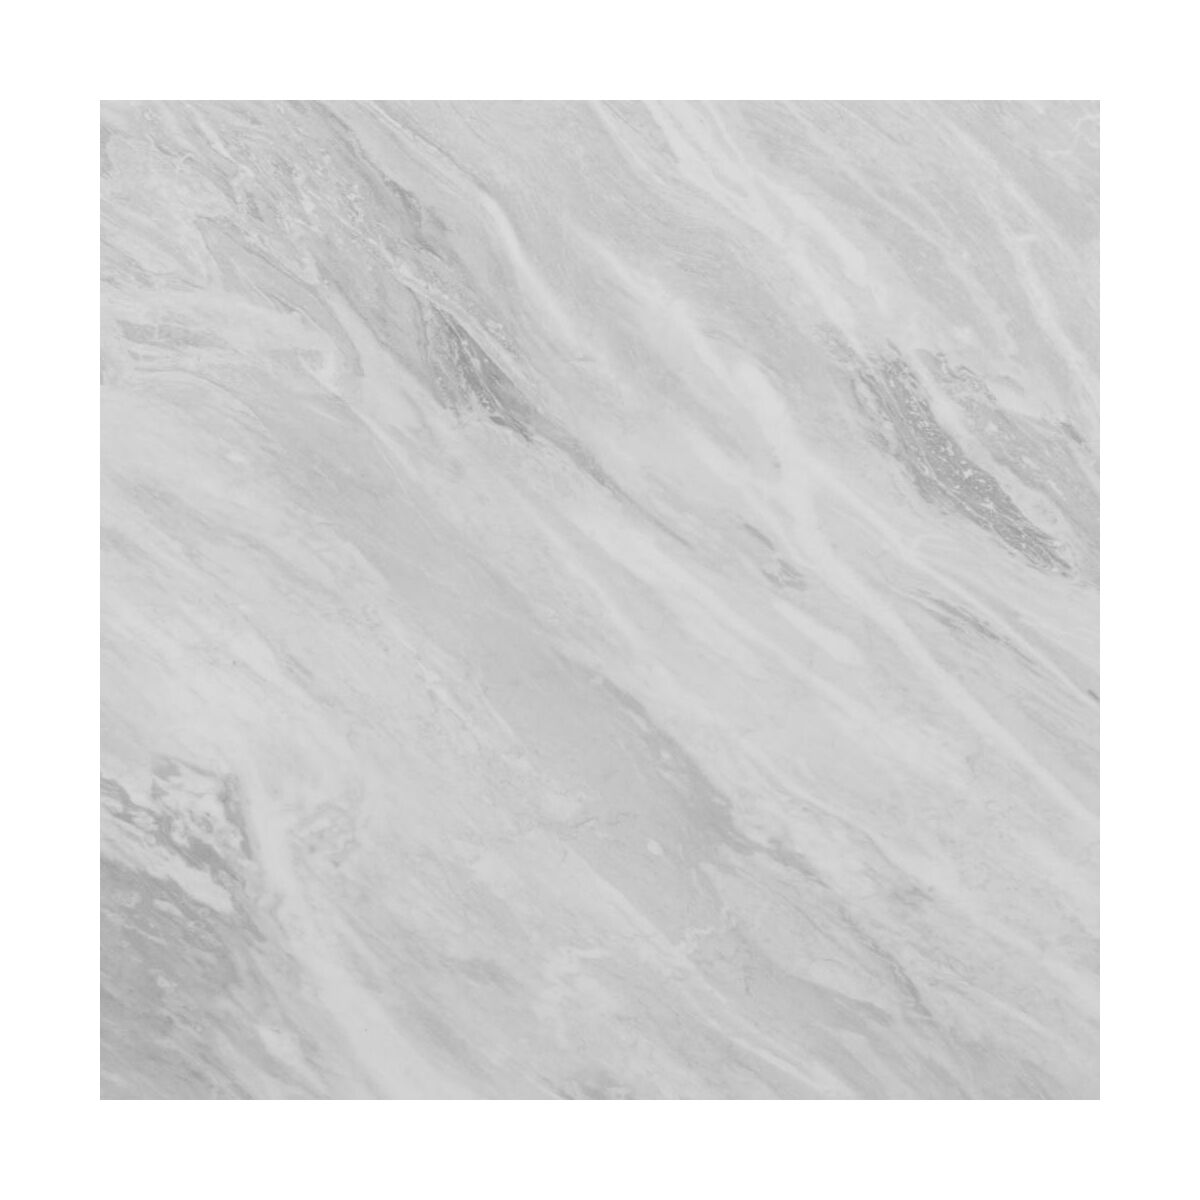 Blat kuchenny laminowany valenzia marble S63038 Pfleiderer